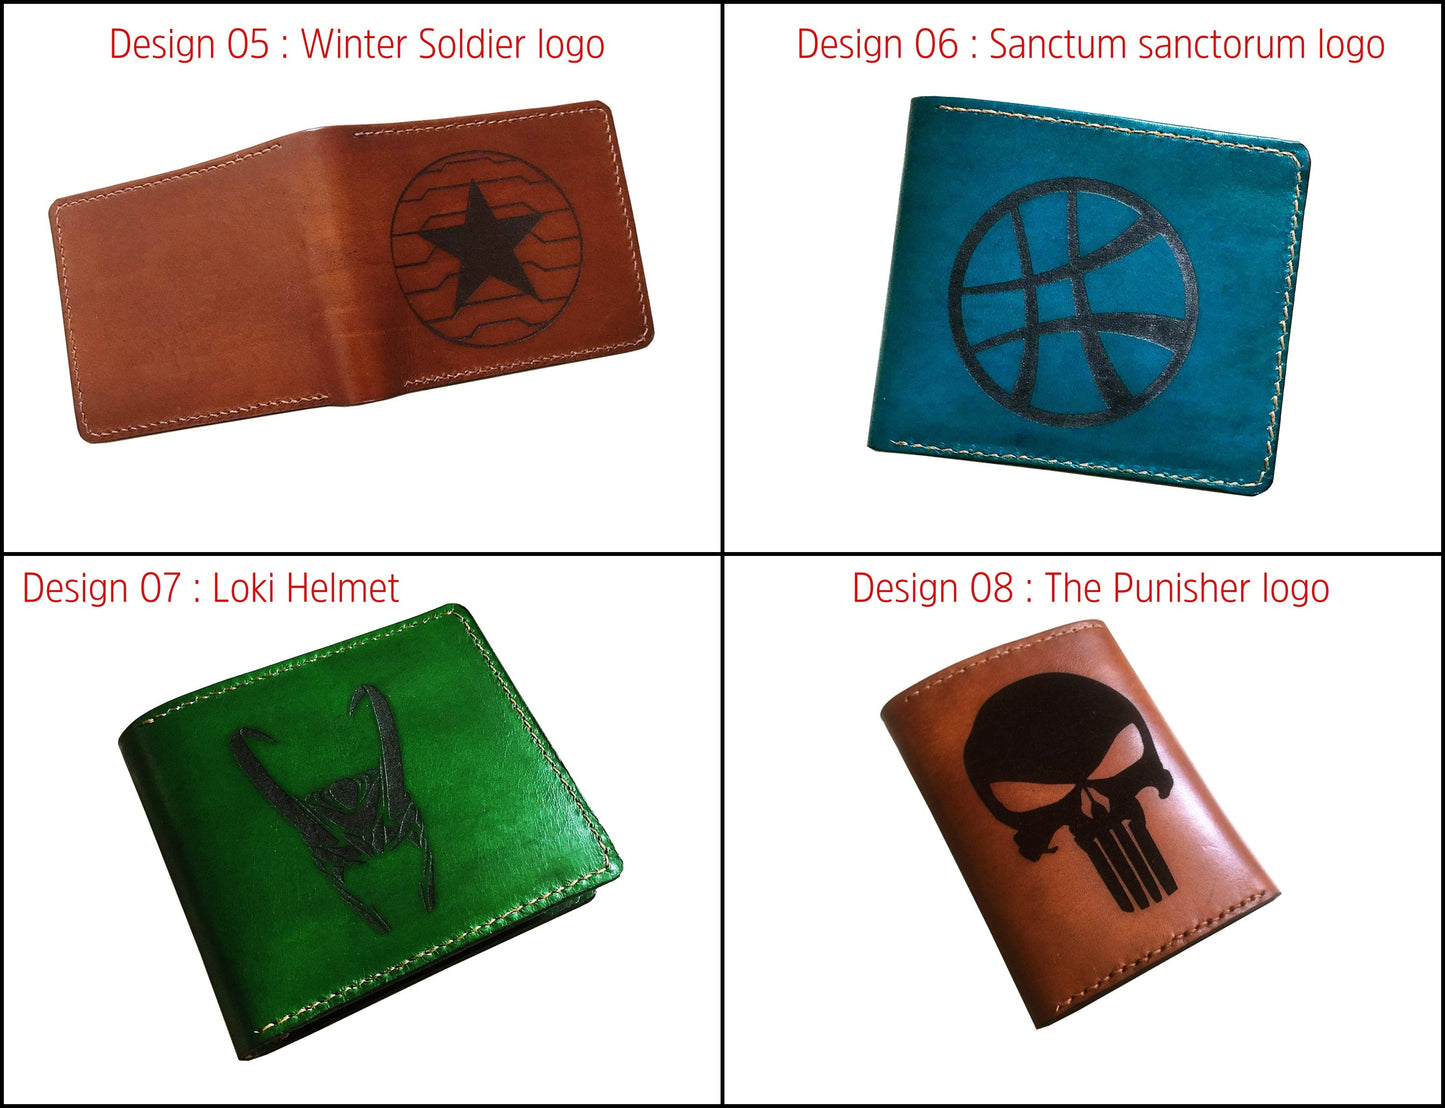 Mayan Corner - Superheroes leather handmade wallet, customized men's wallet, Leather gift ideas for men - Spiderman logo wallet